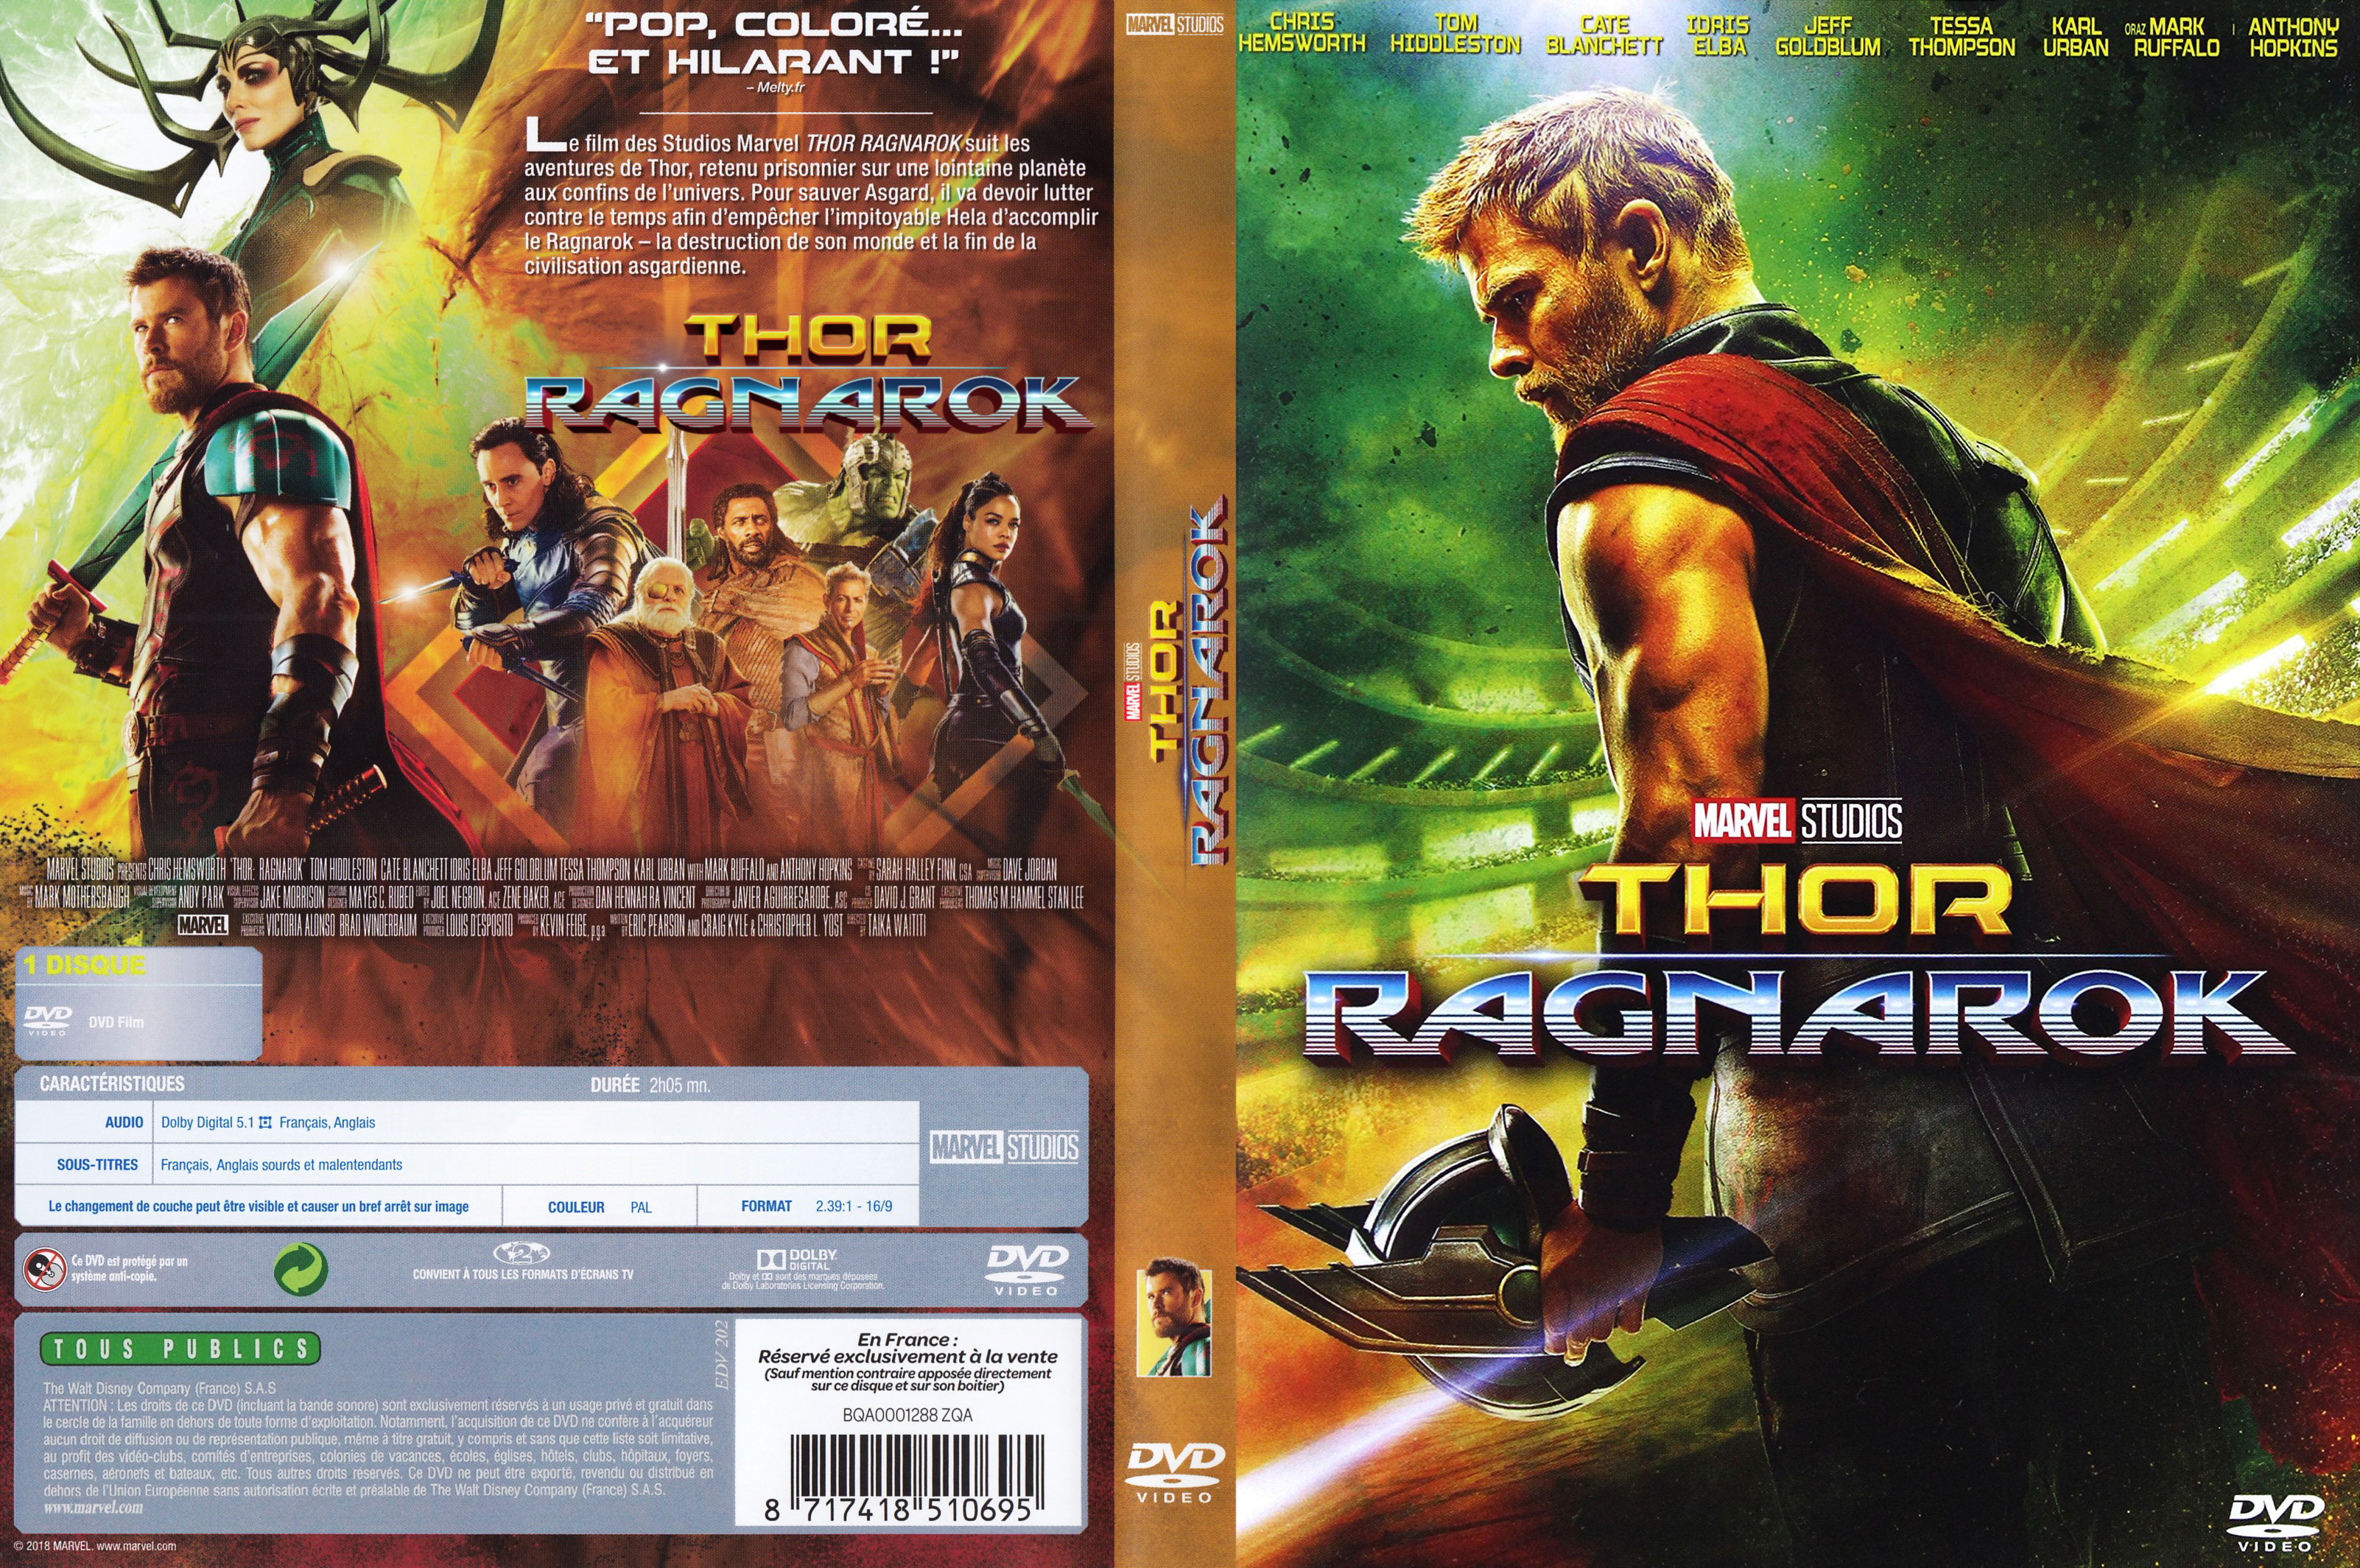 Jaquette DVD Thor Ragnarok custom